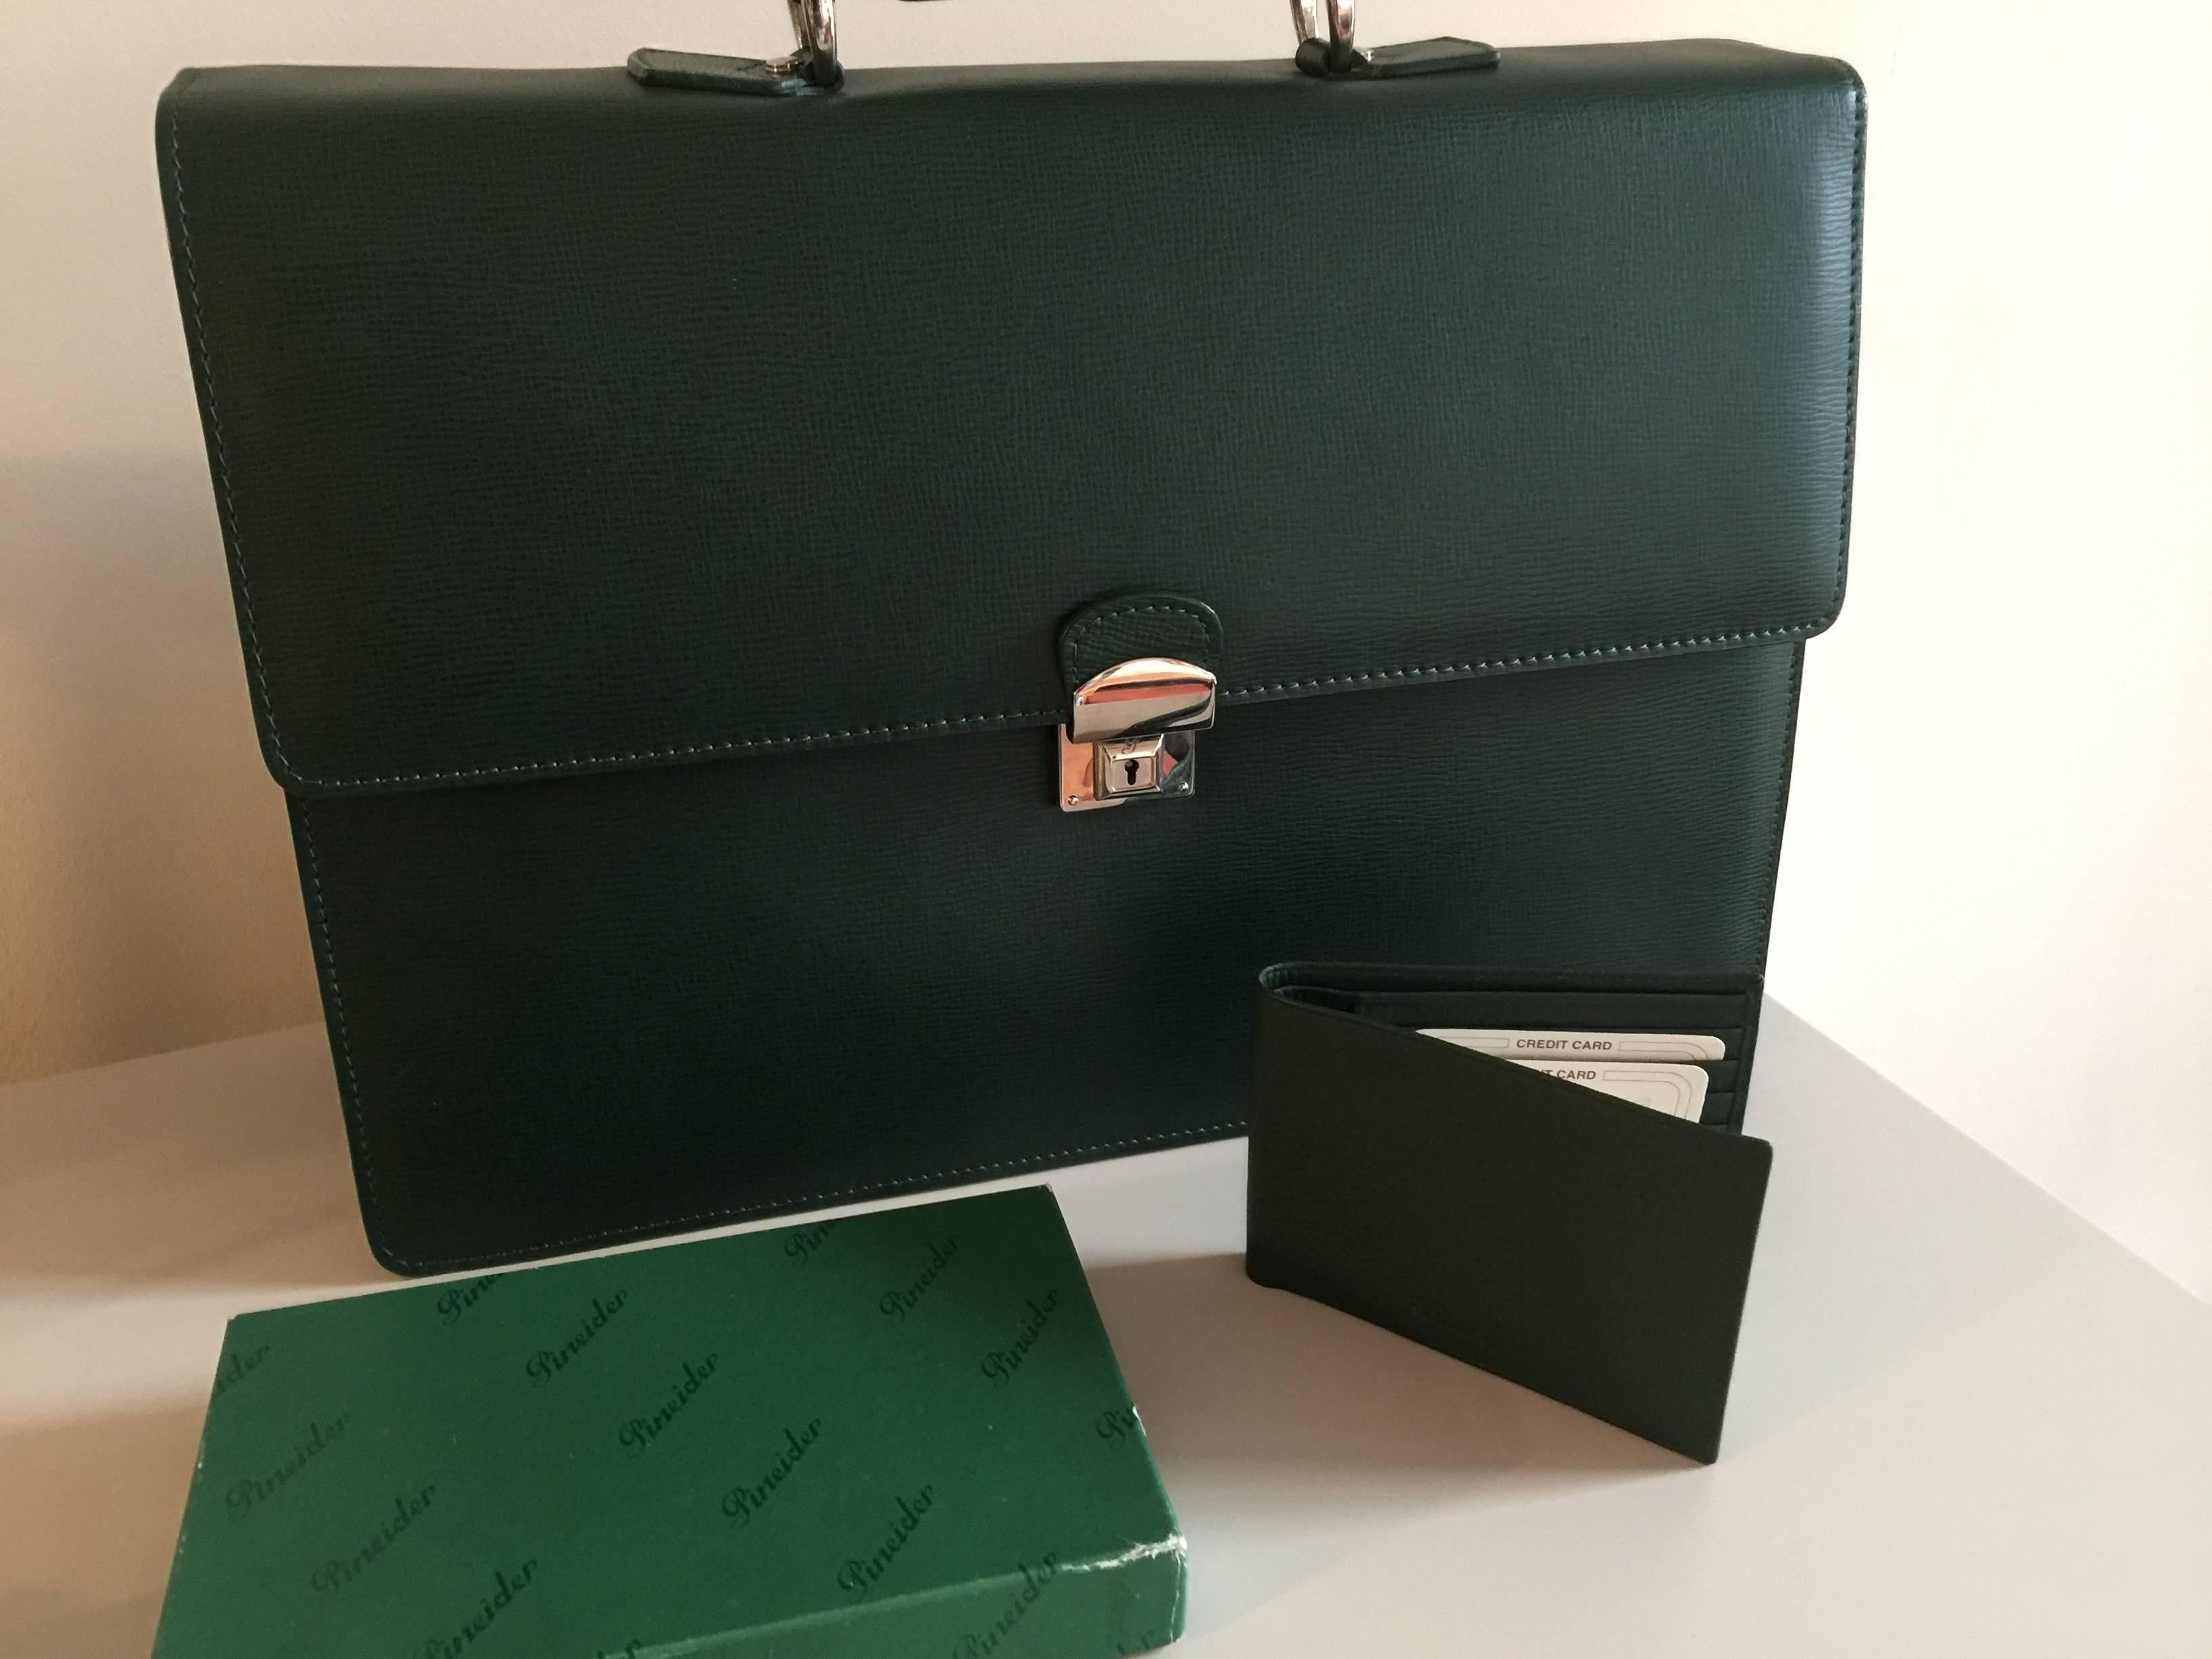 Modern Pineider Men's Green Leather Briefcase with Matching Wallet